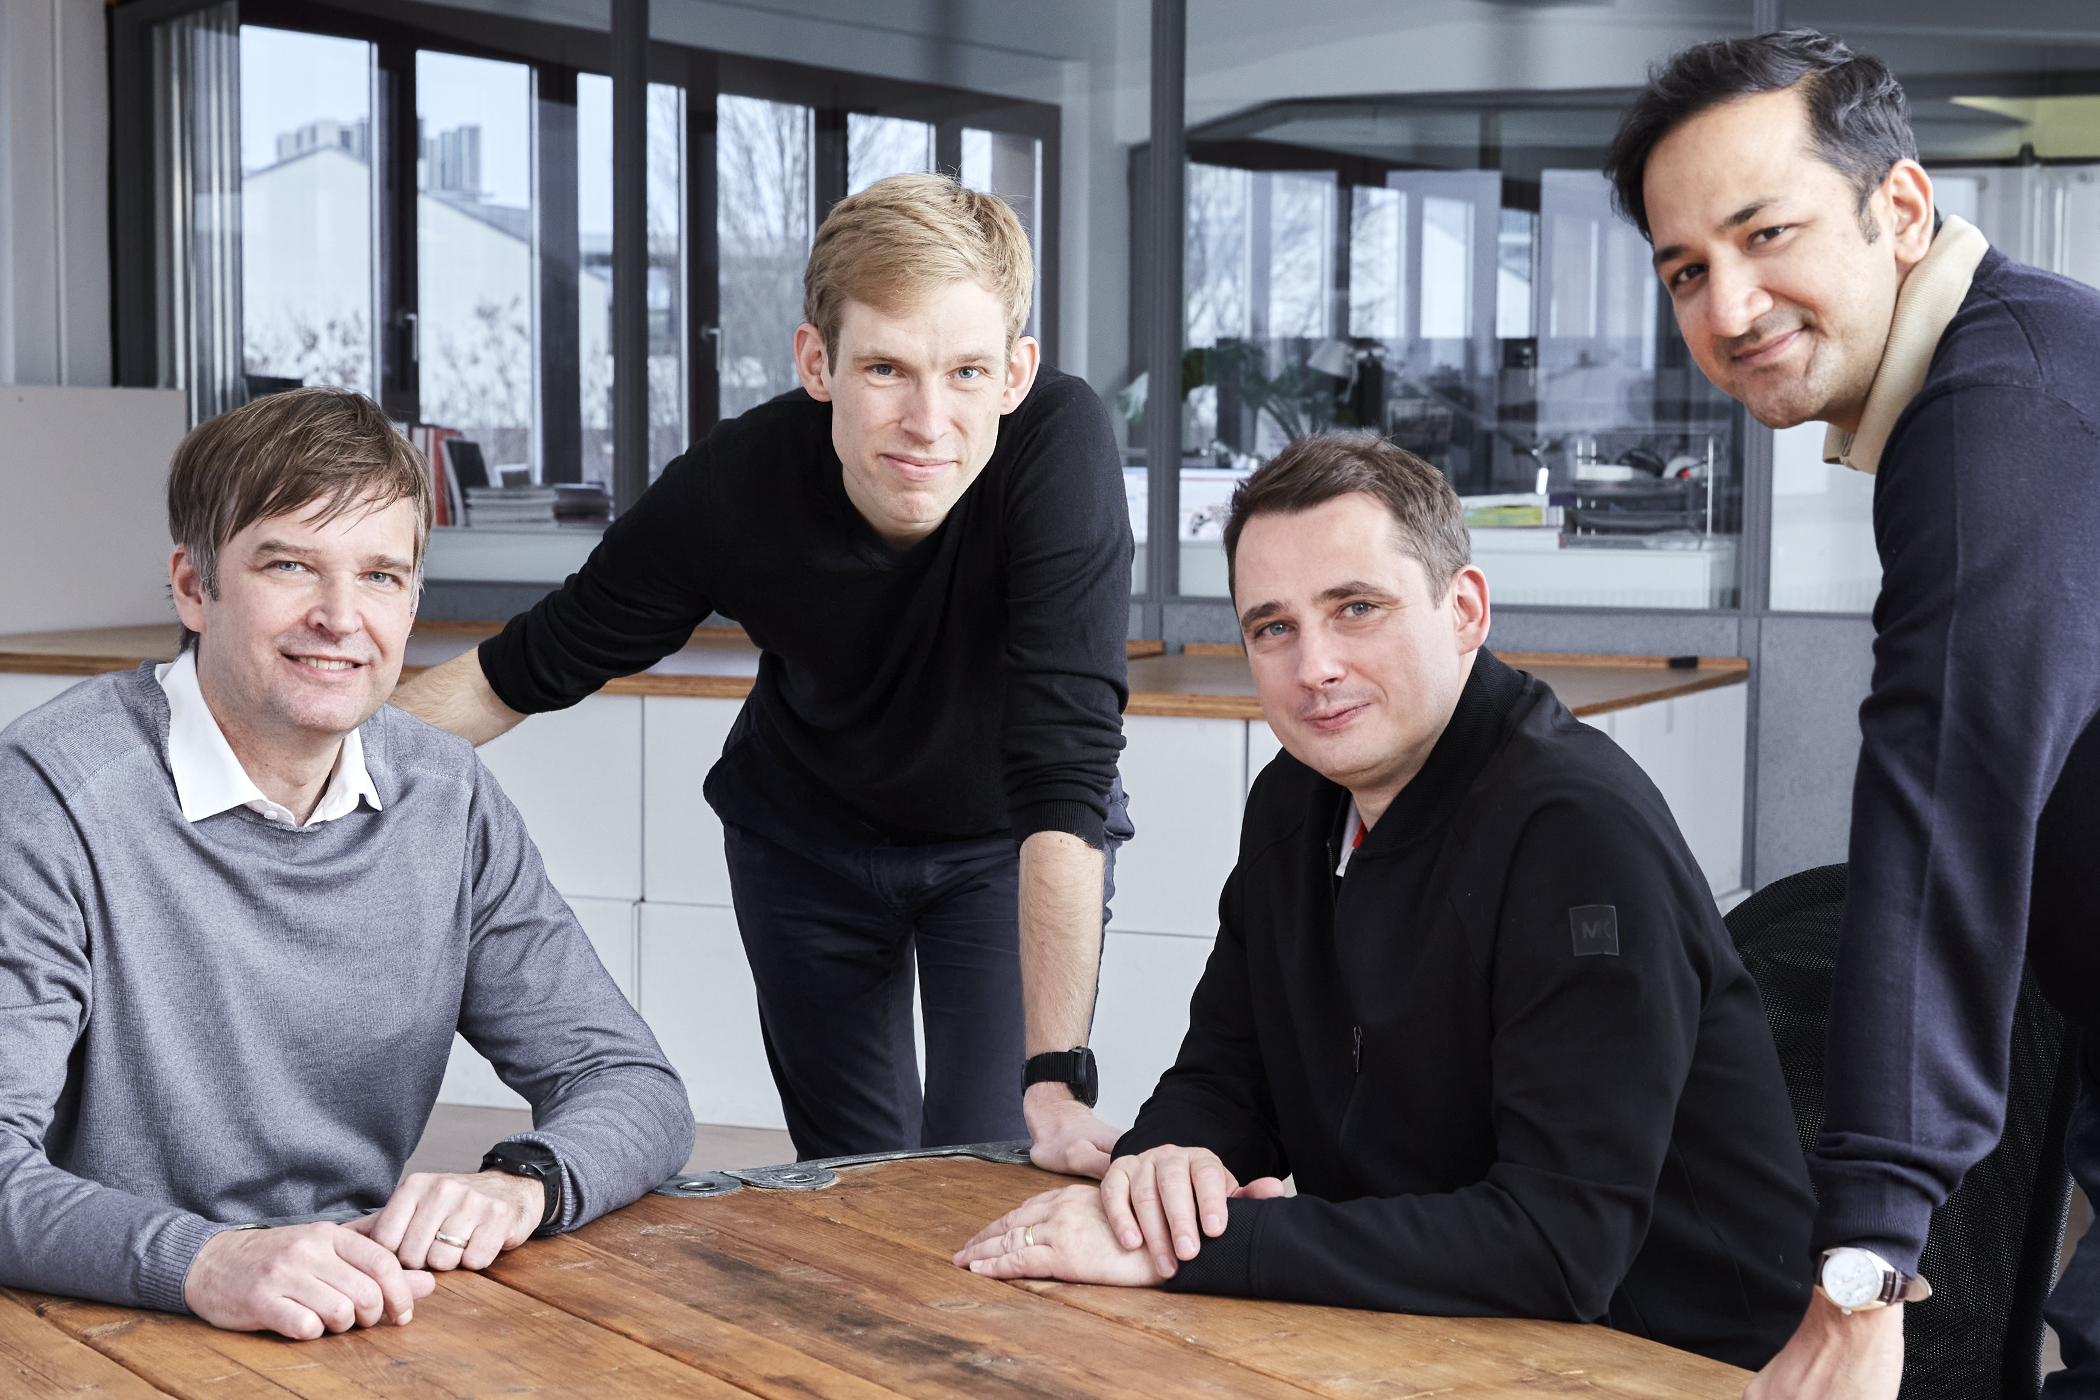 The MakerVerse founding team. Left to right: Christian Matzen, Tim Schark, Markus Seibold, Manish Katoch. Photo via MakerVerse.